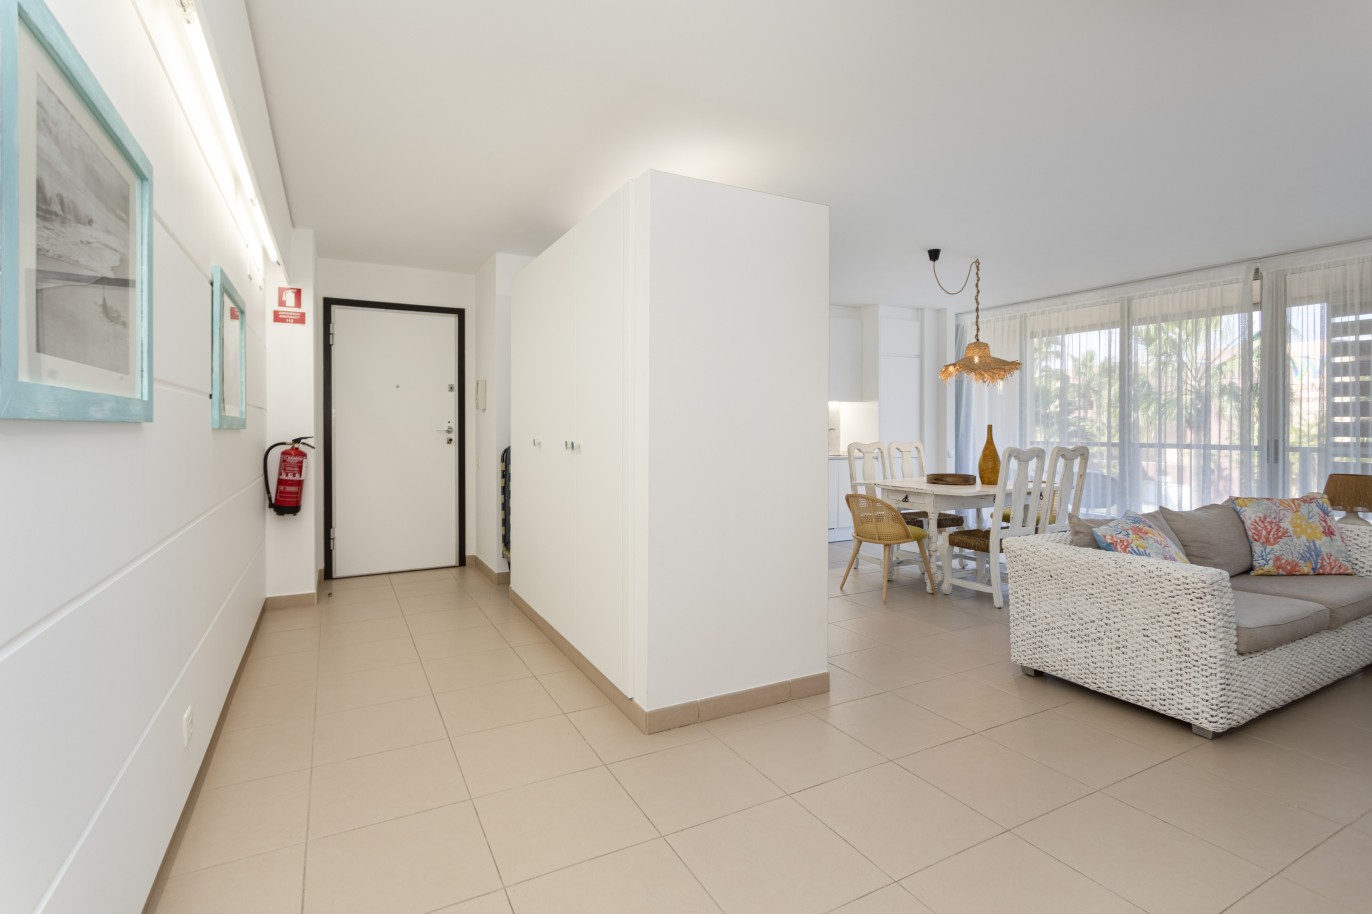 2-bedroom flat for sale in private condominium in Salgados, Algarve_253485